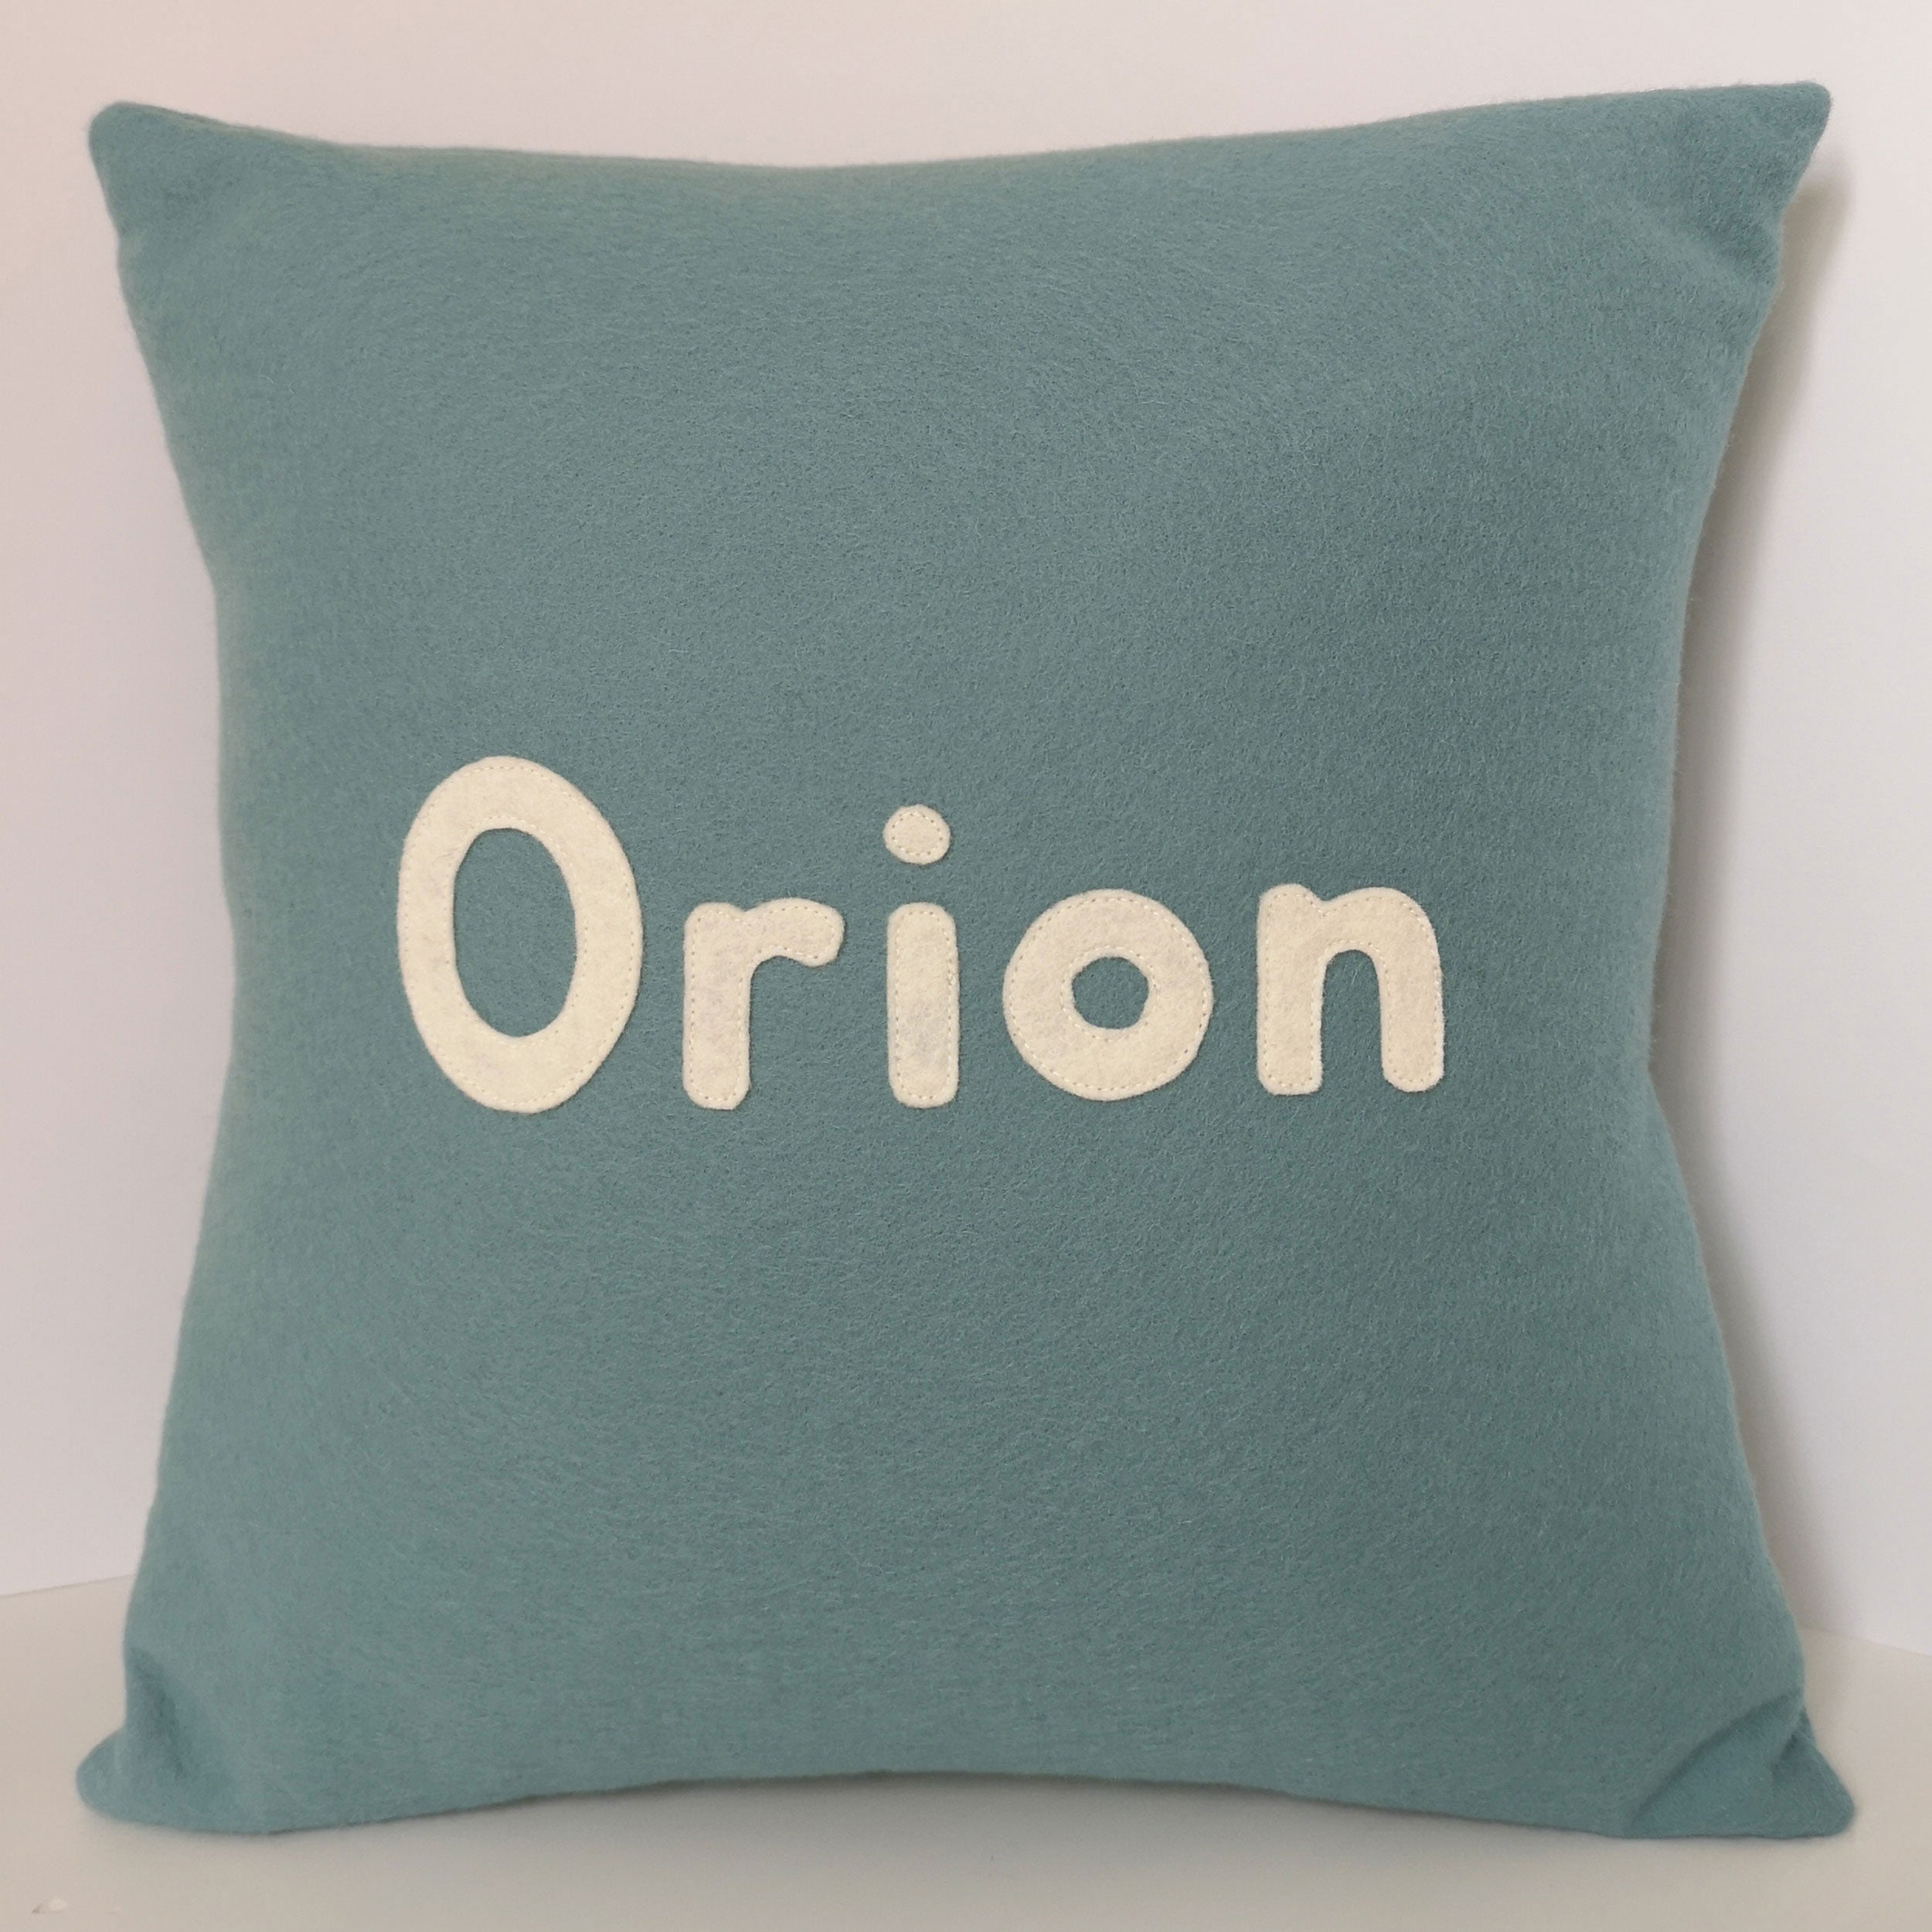 personalised name cushion in teal blue wool felt